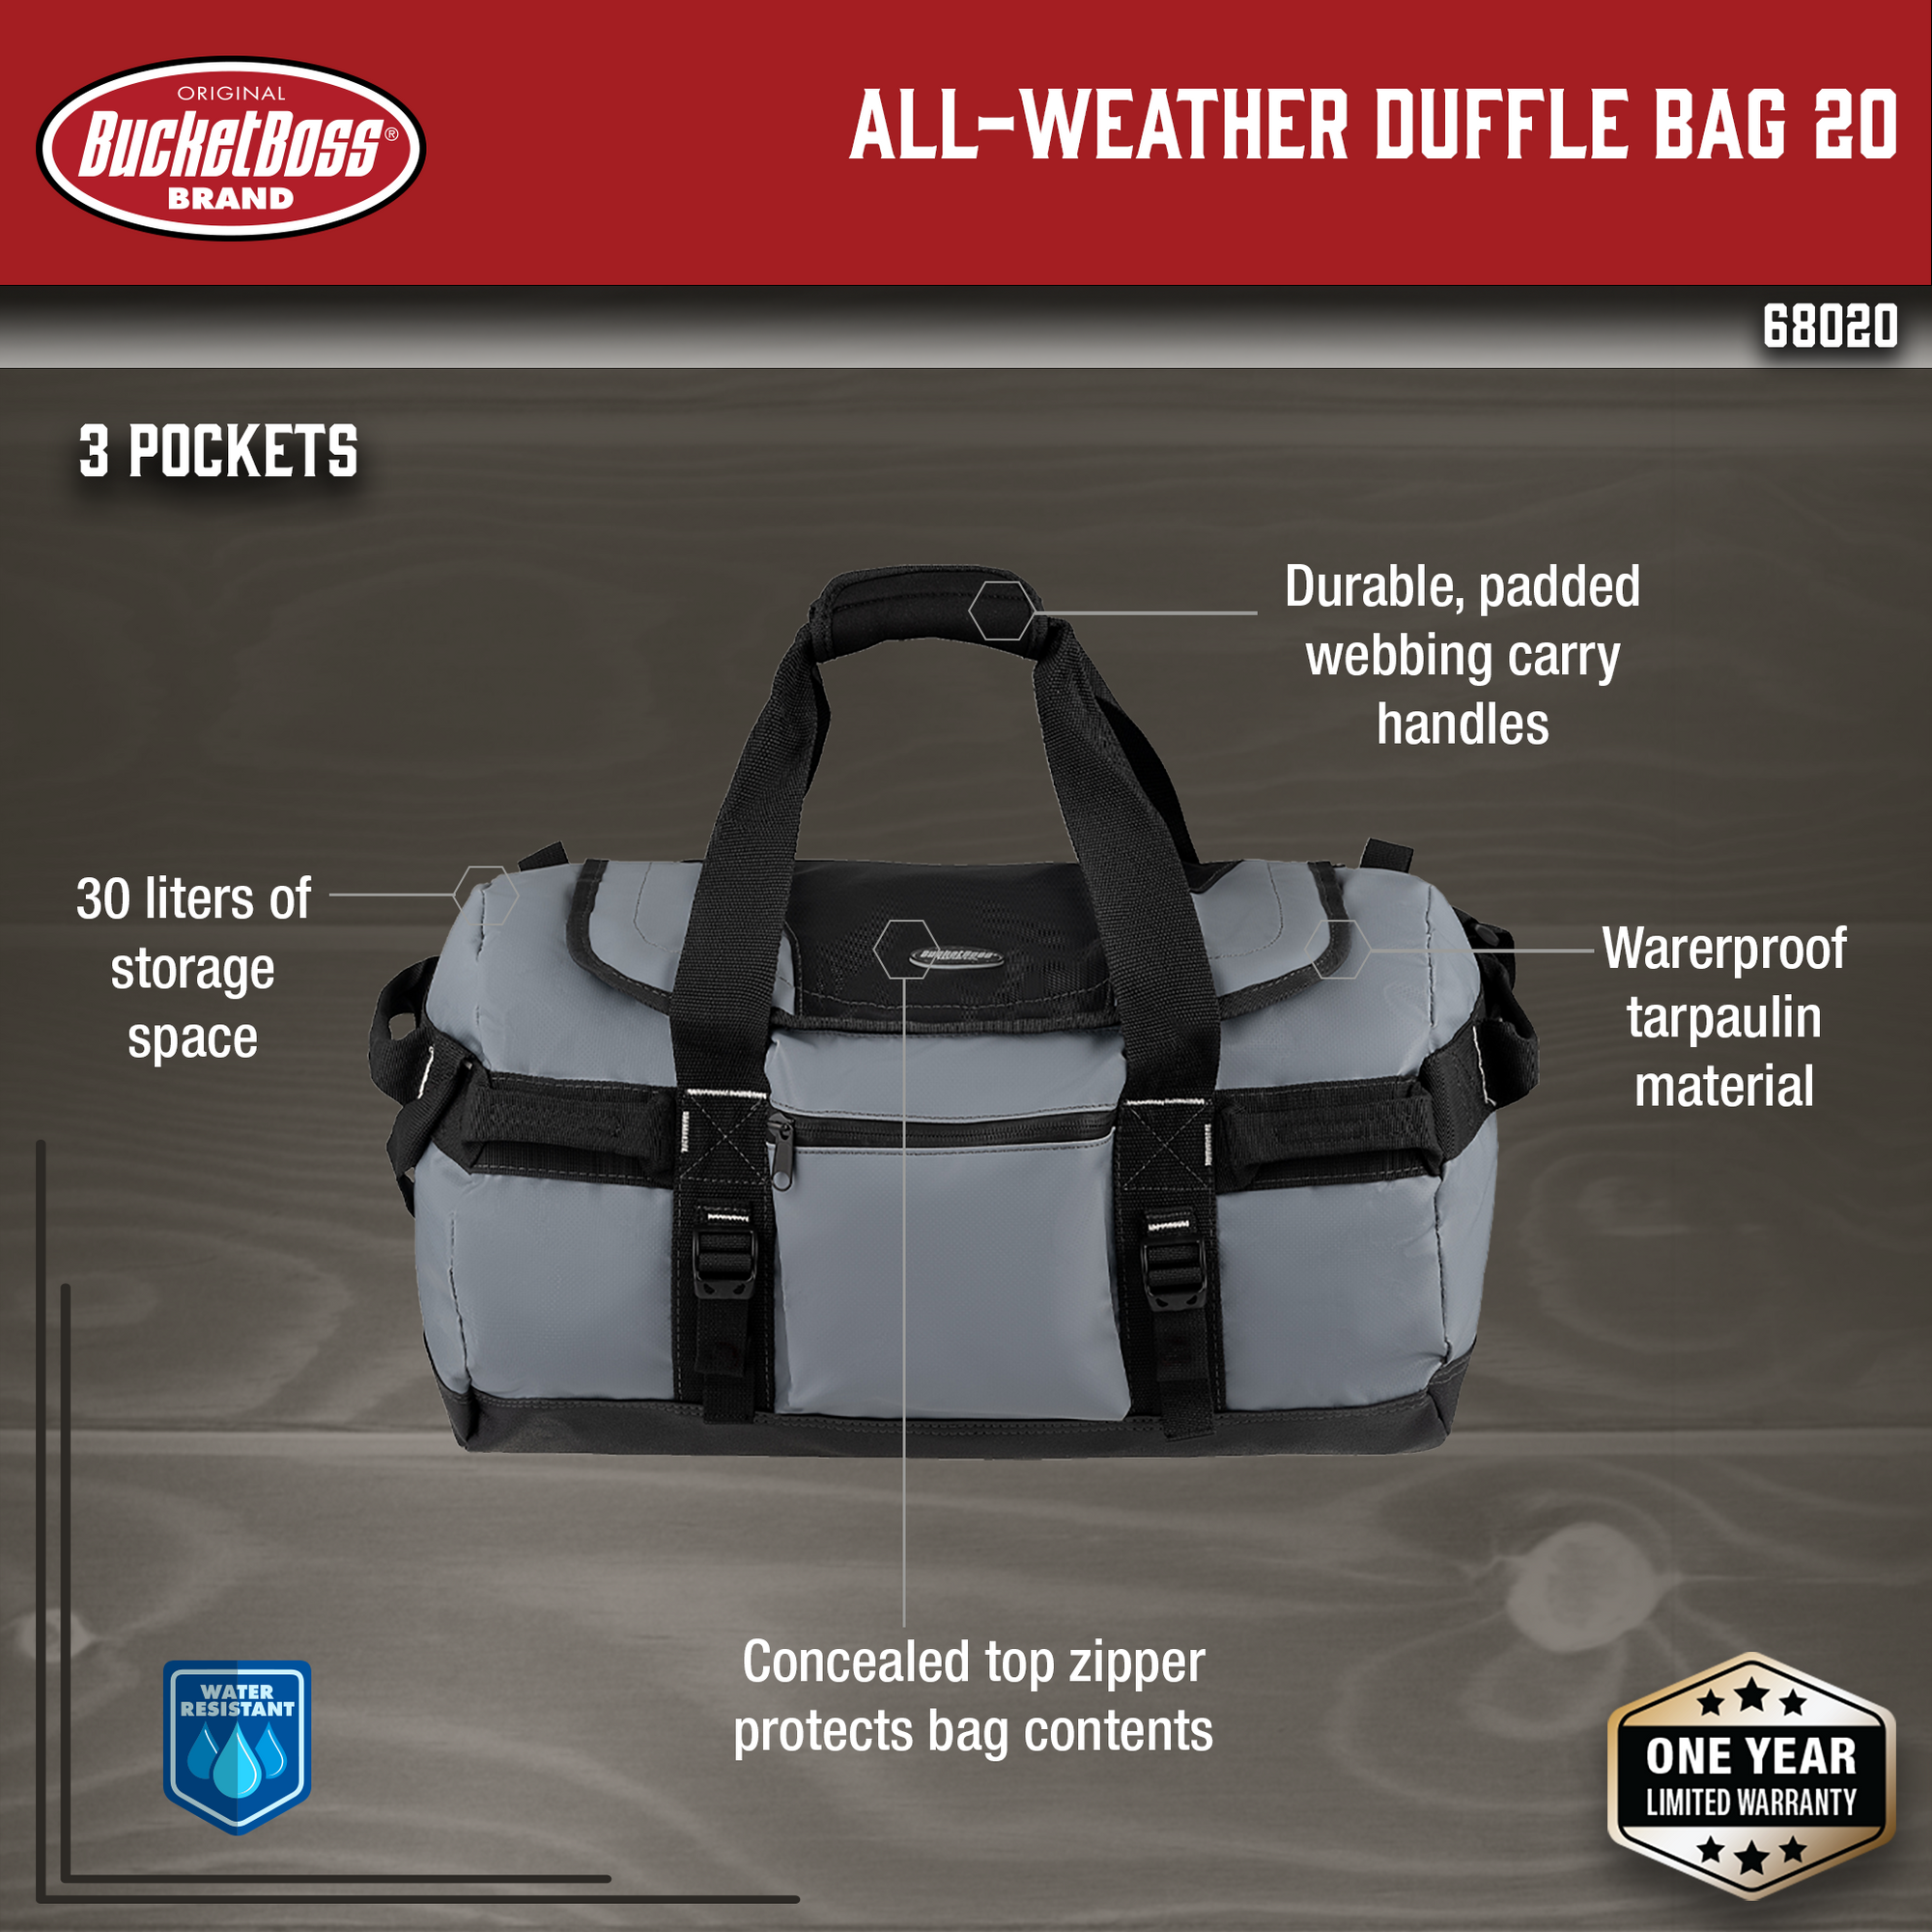 All-Weather Duffel Bag 20